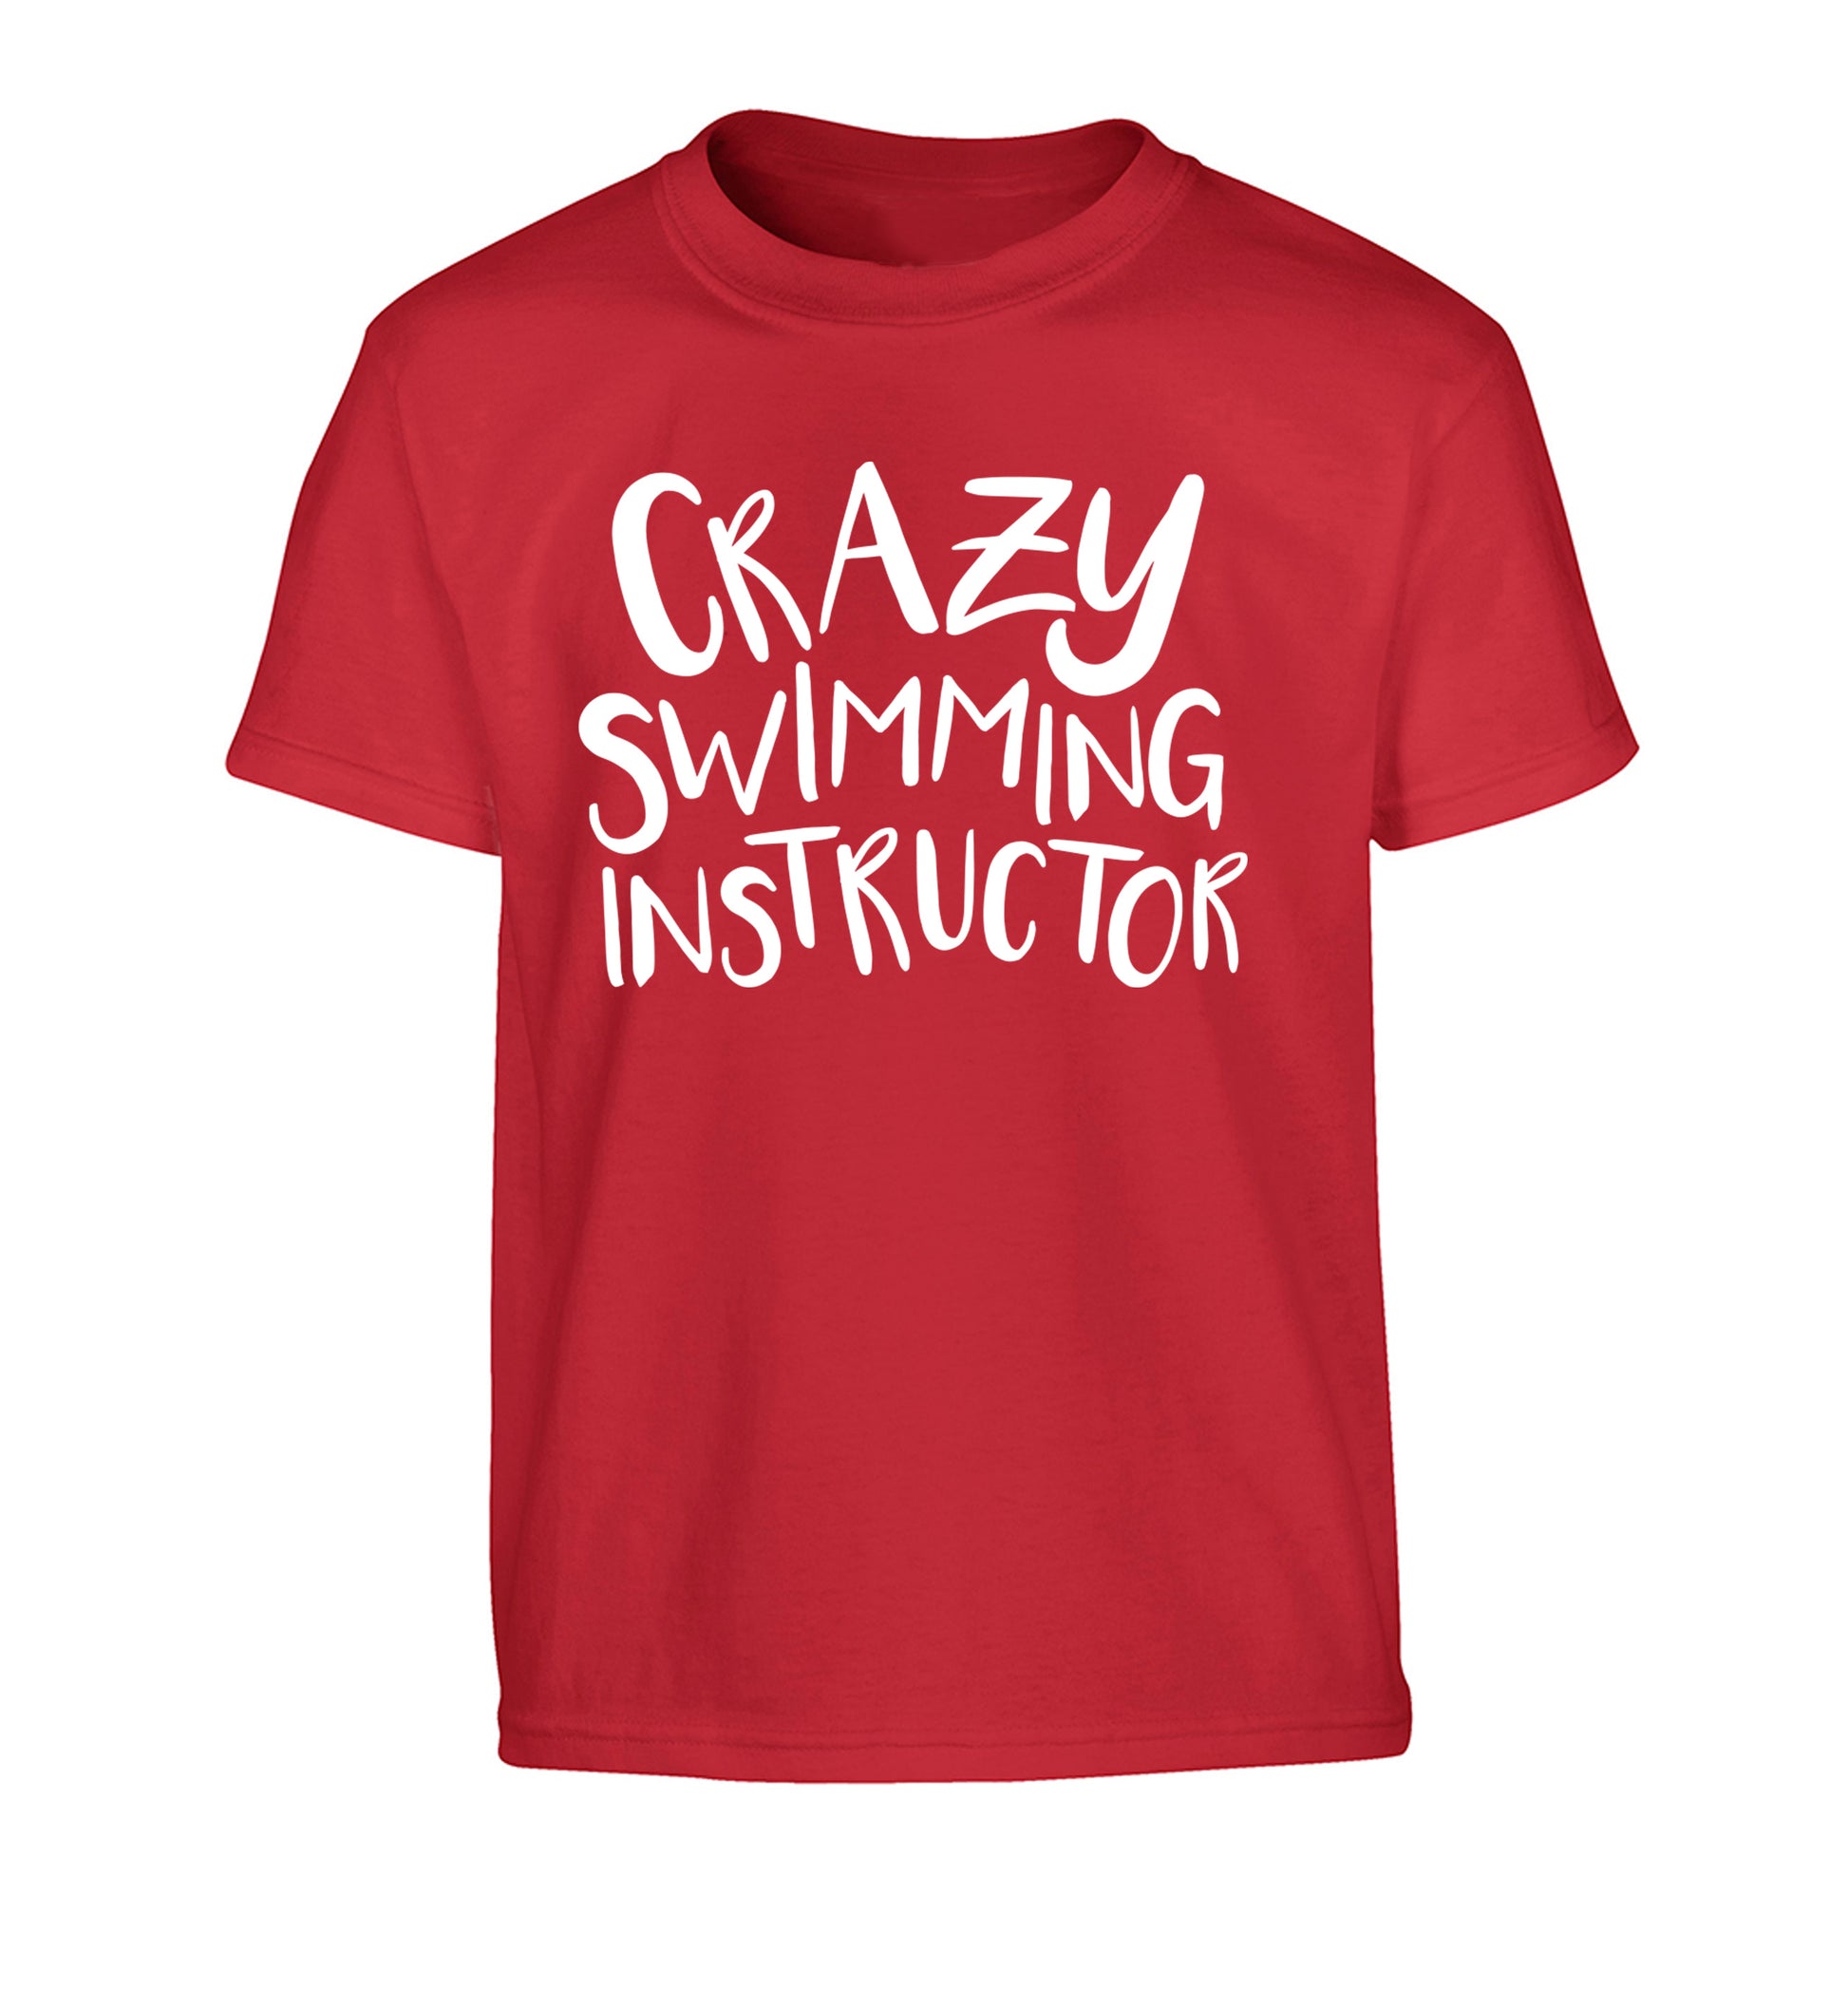 Crazy swimming instructor Children's red Tshirt 12-13 Years